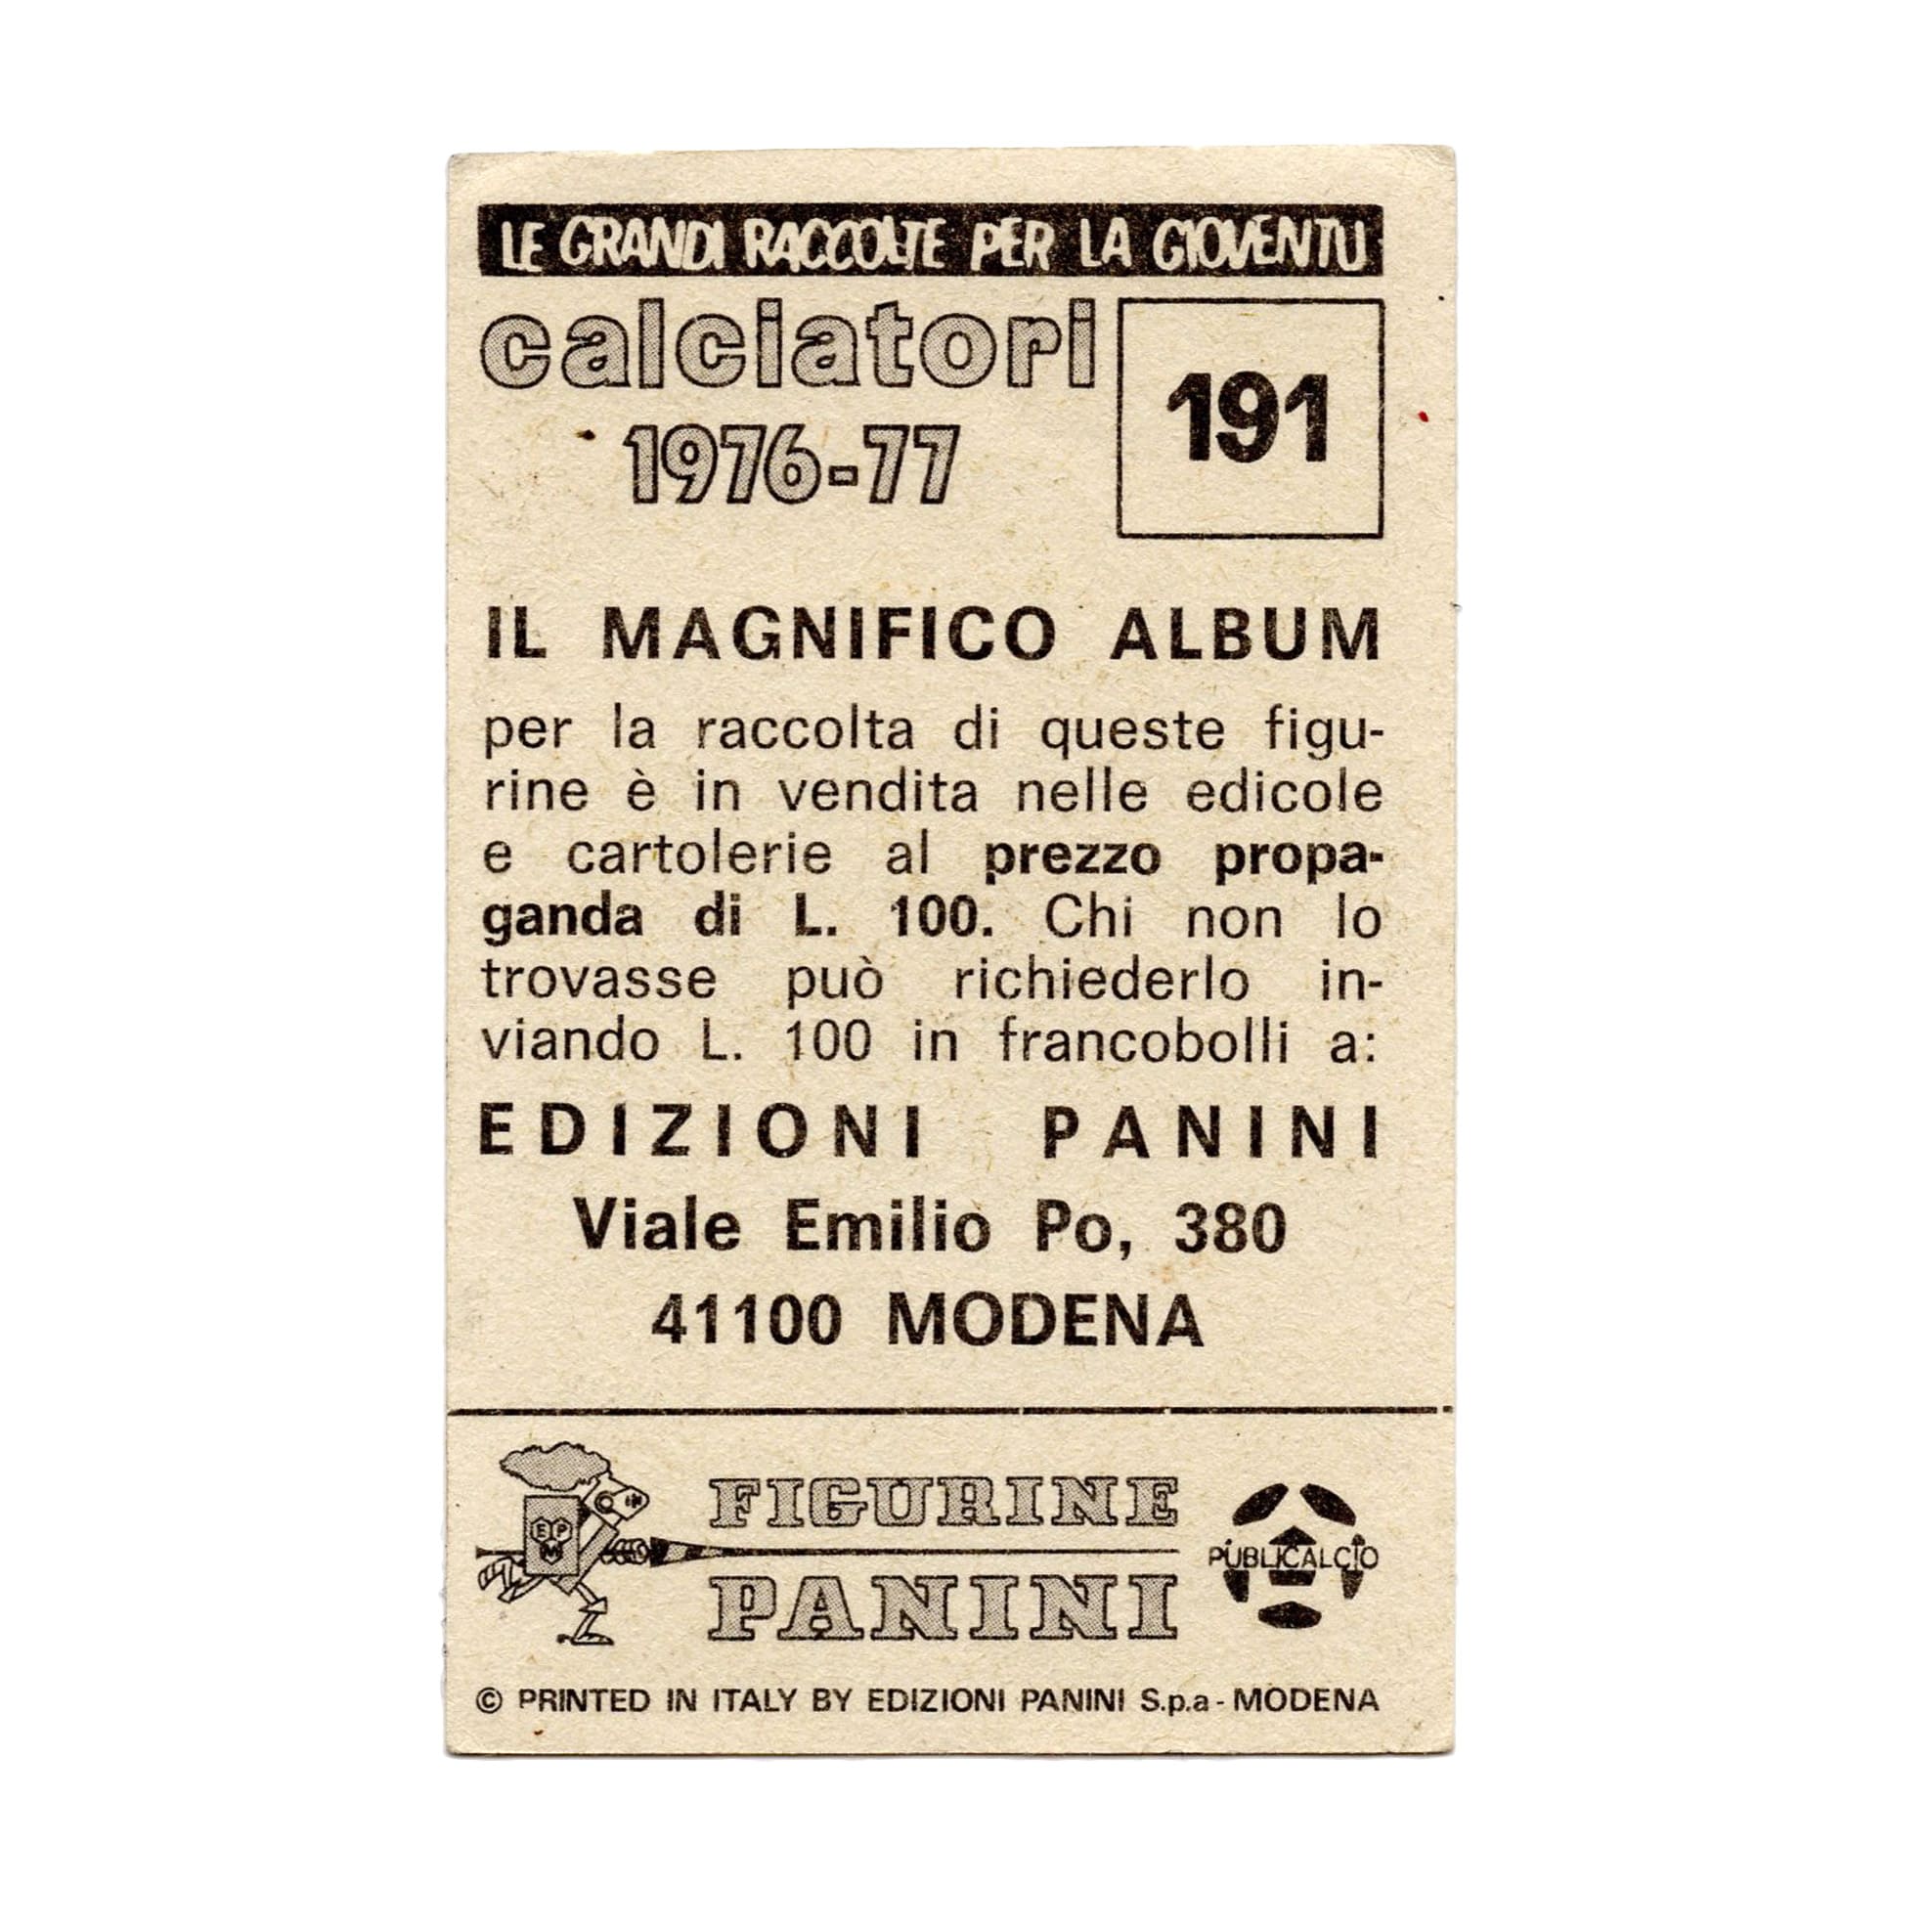 Only Good Stickers: Panini Calciatori 1978-79